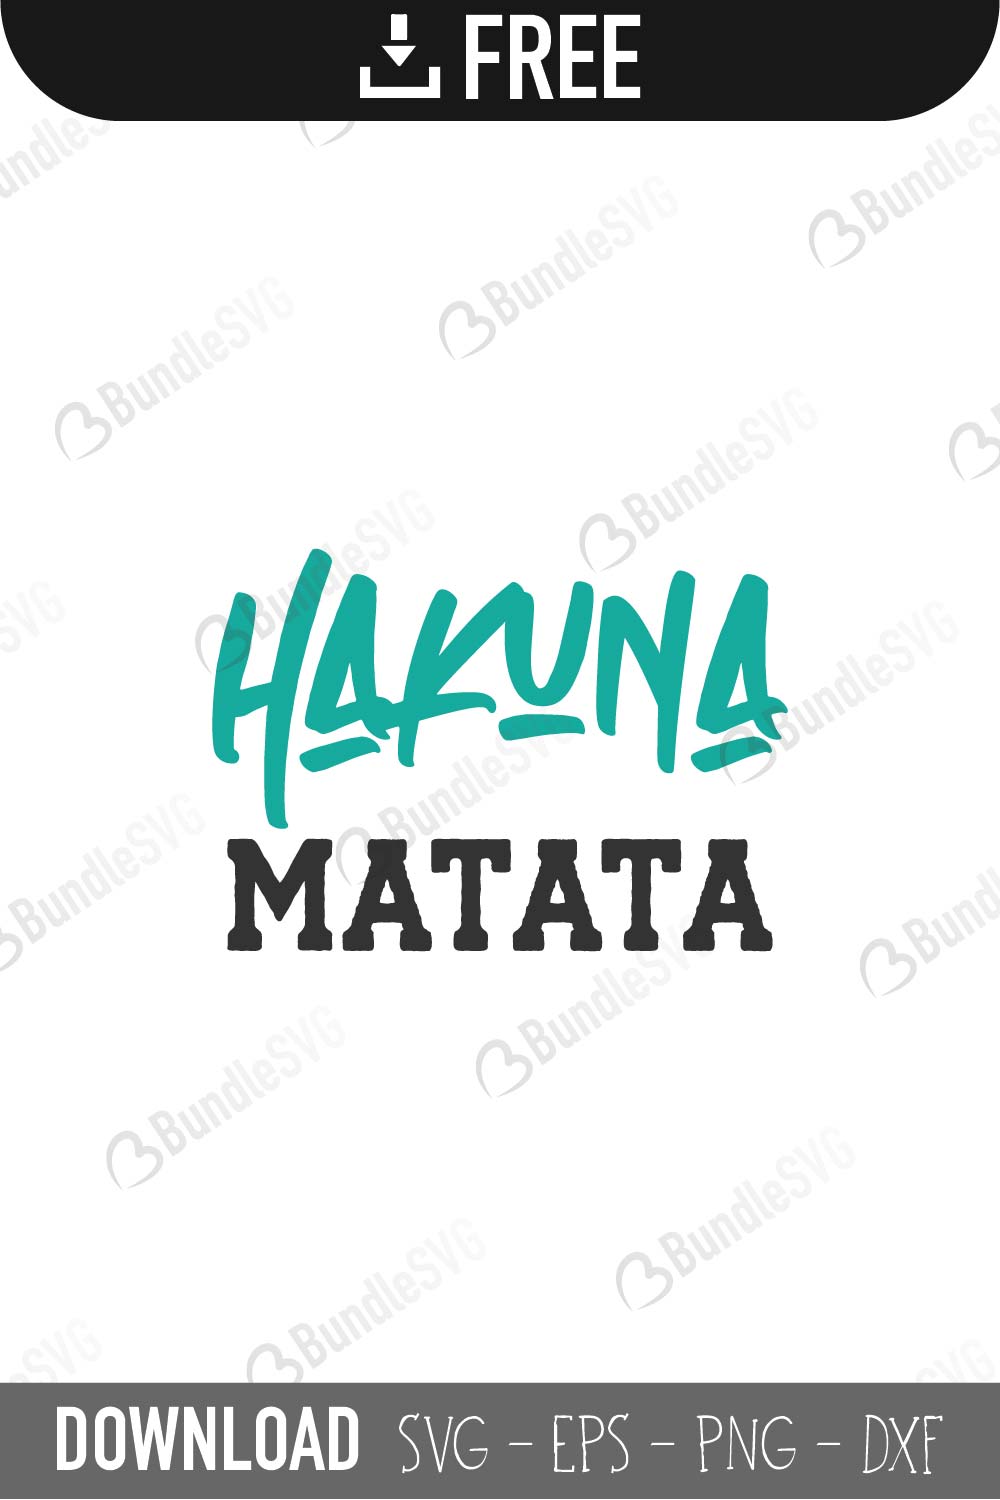 Hakuna Matata SVG Cut Files Free Download | BundleSVG